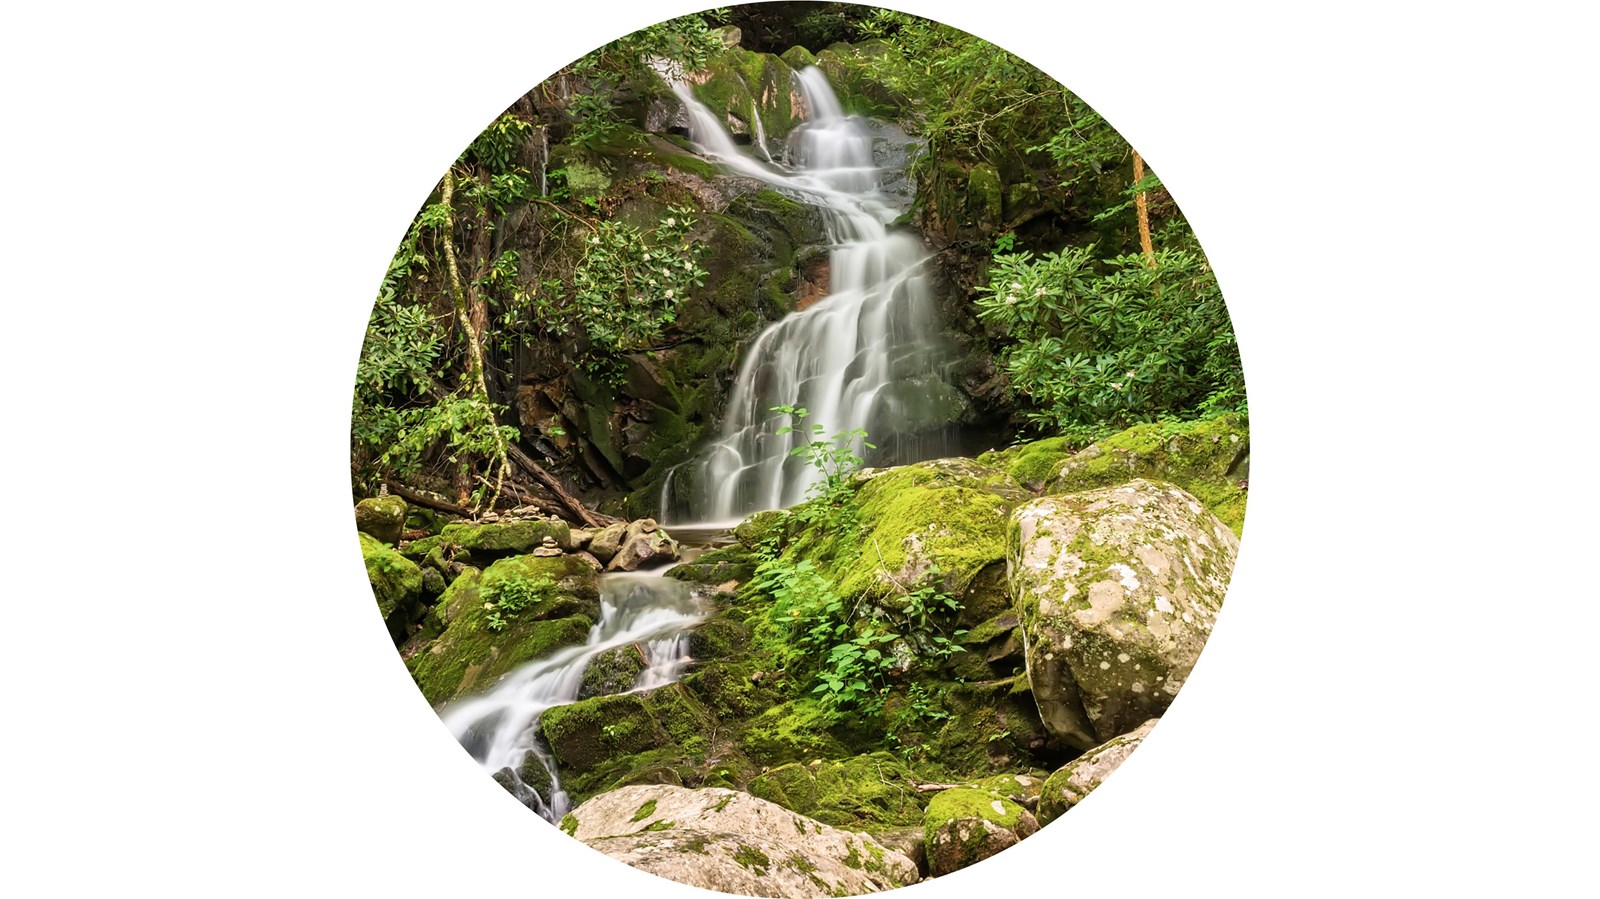 A long, skinny waterfall flowing through lush vegetation. 